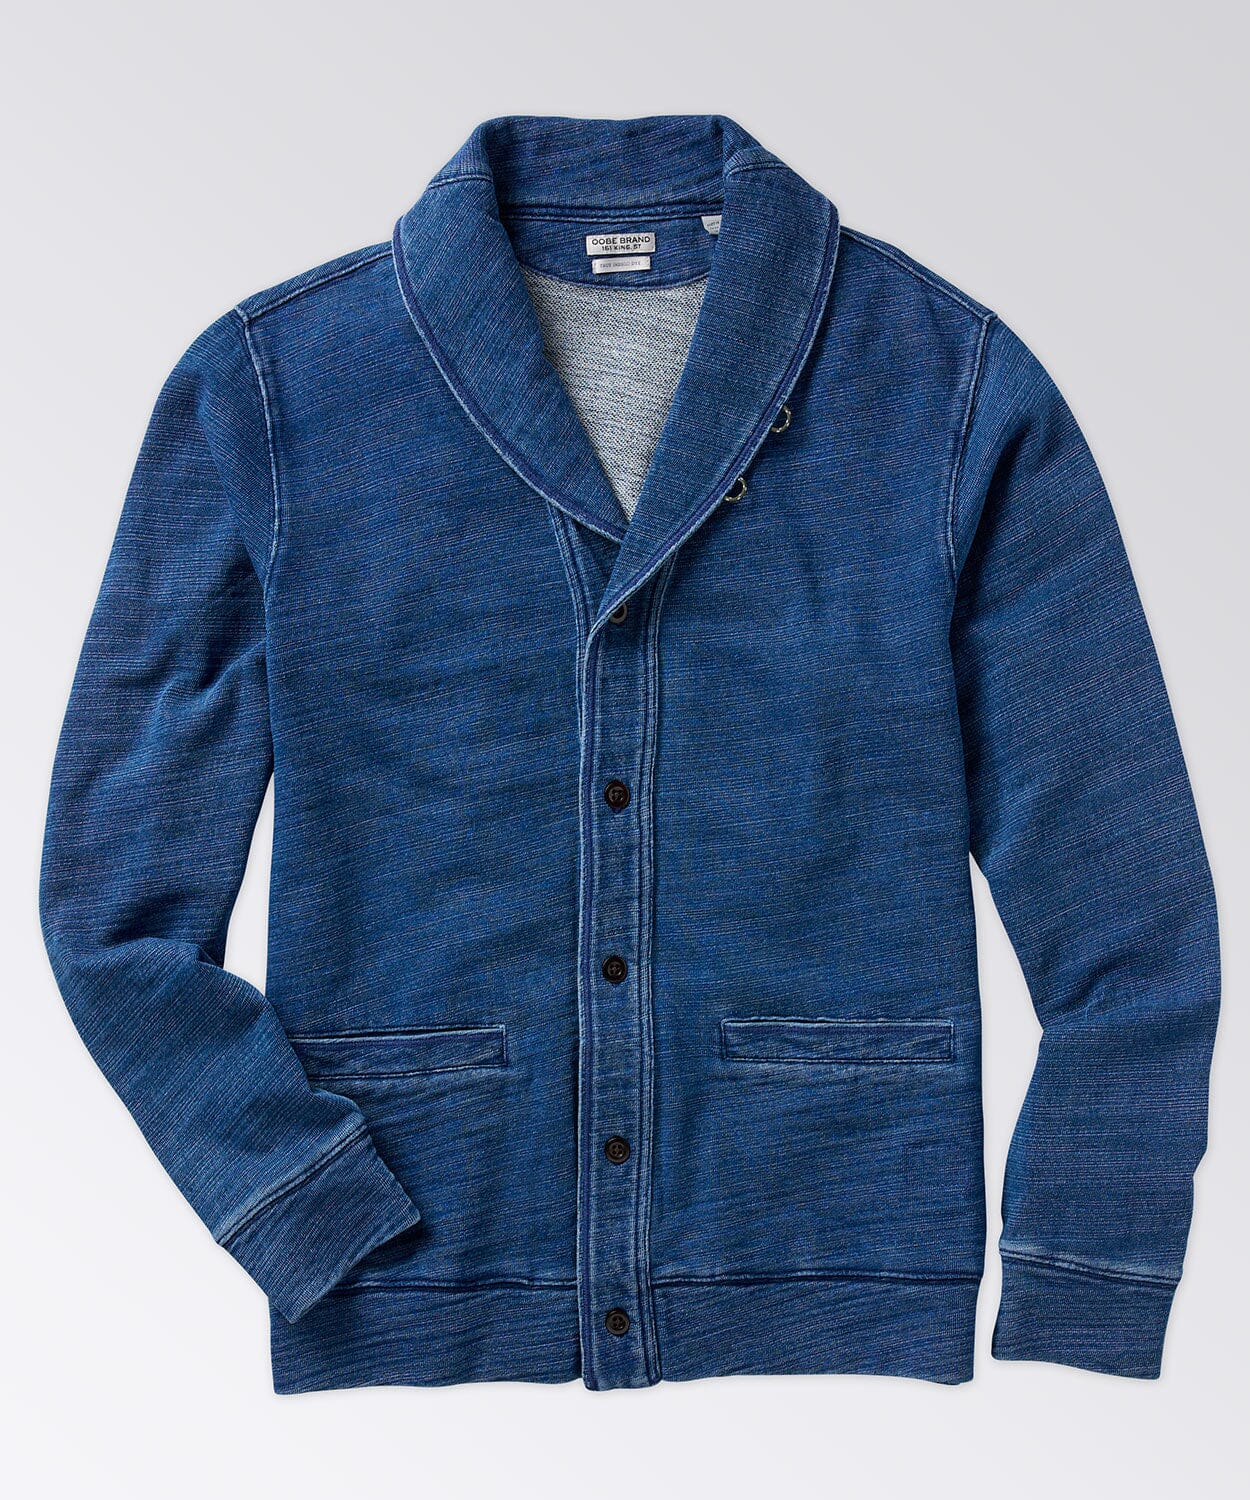 OOBE Menswear | Premium Indigo by Blue BRAND Collection